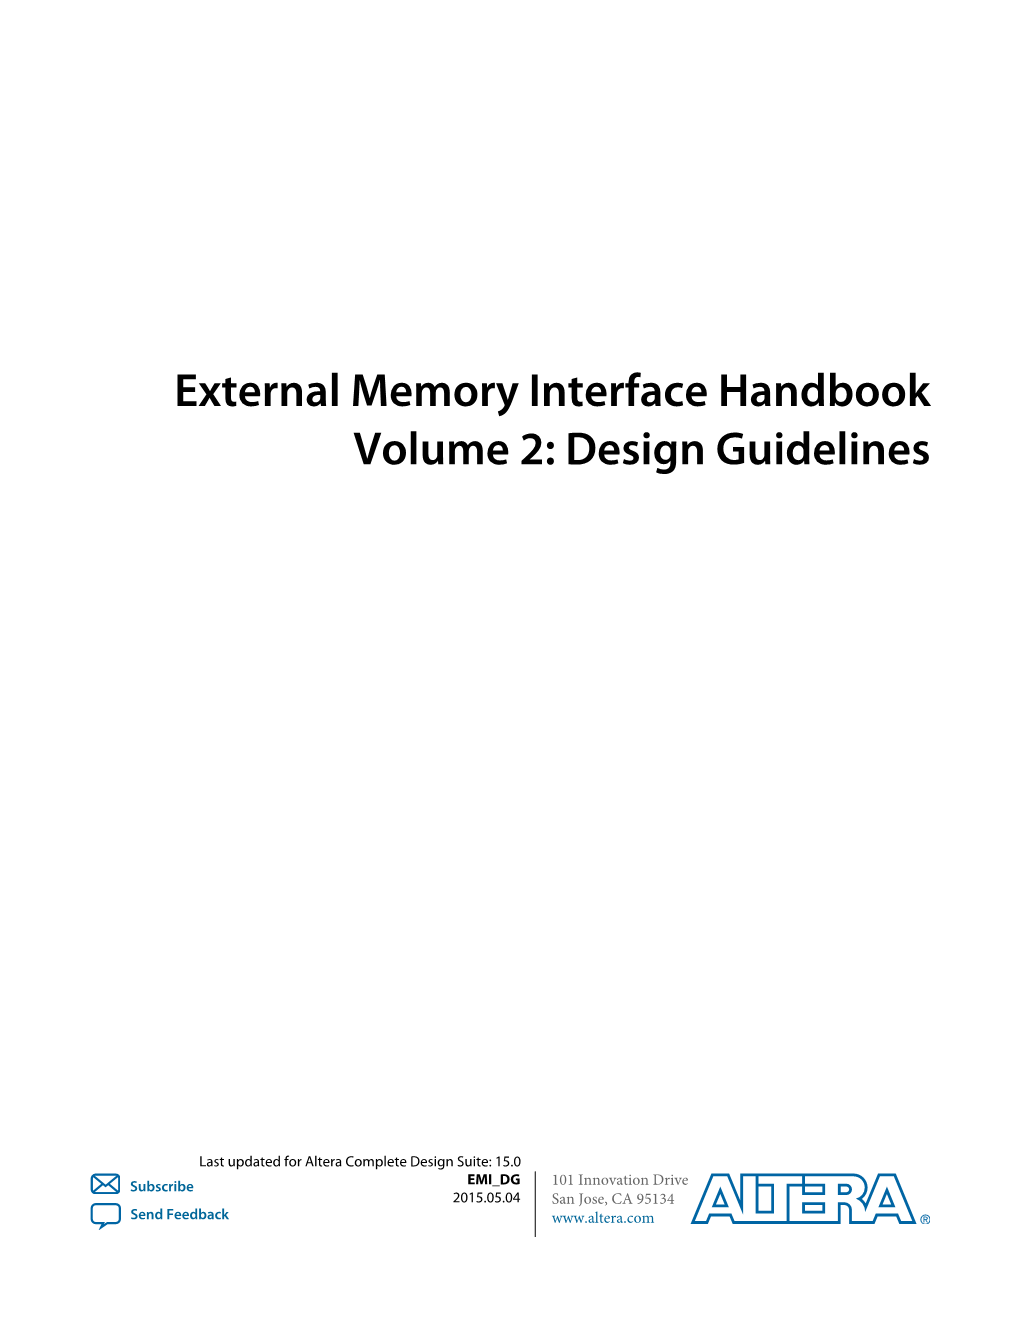 External Memory Interface Handbook Volume 2: Design Guidelines